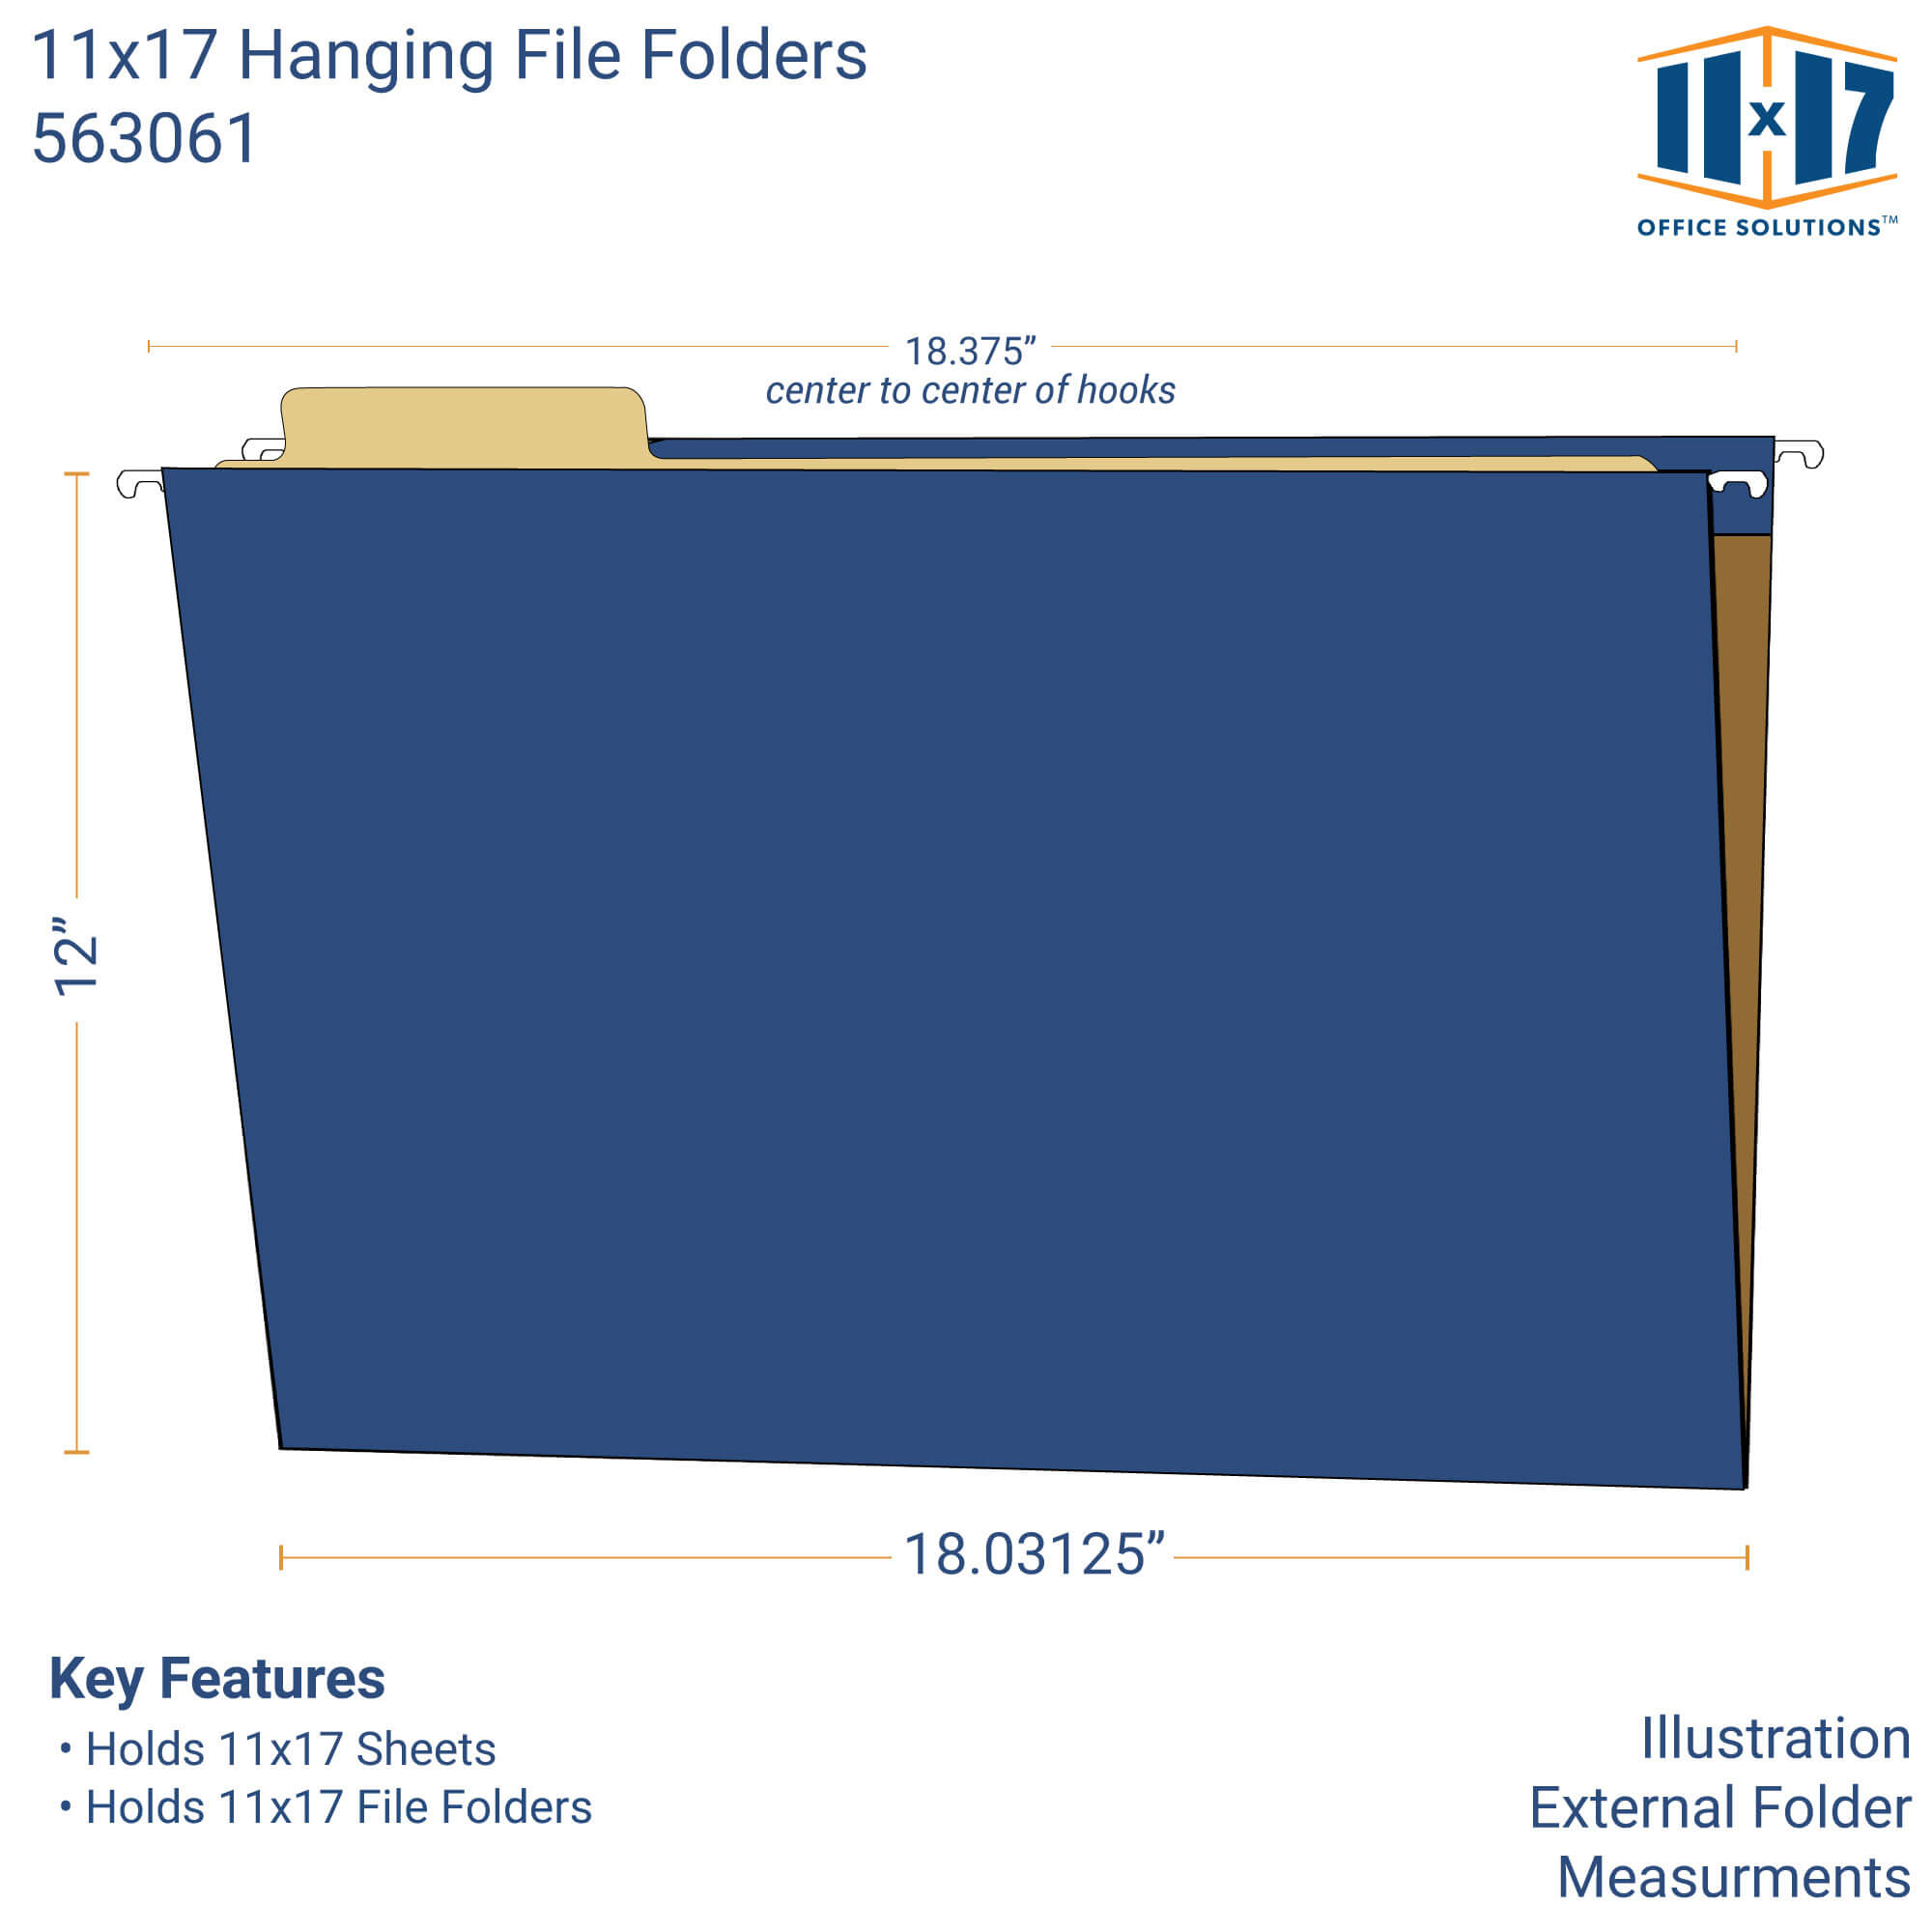 11x17 Hanging File Folders